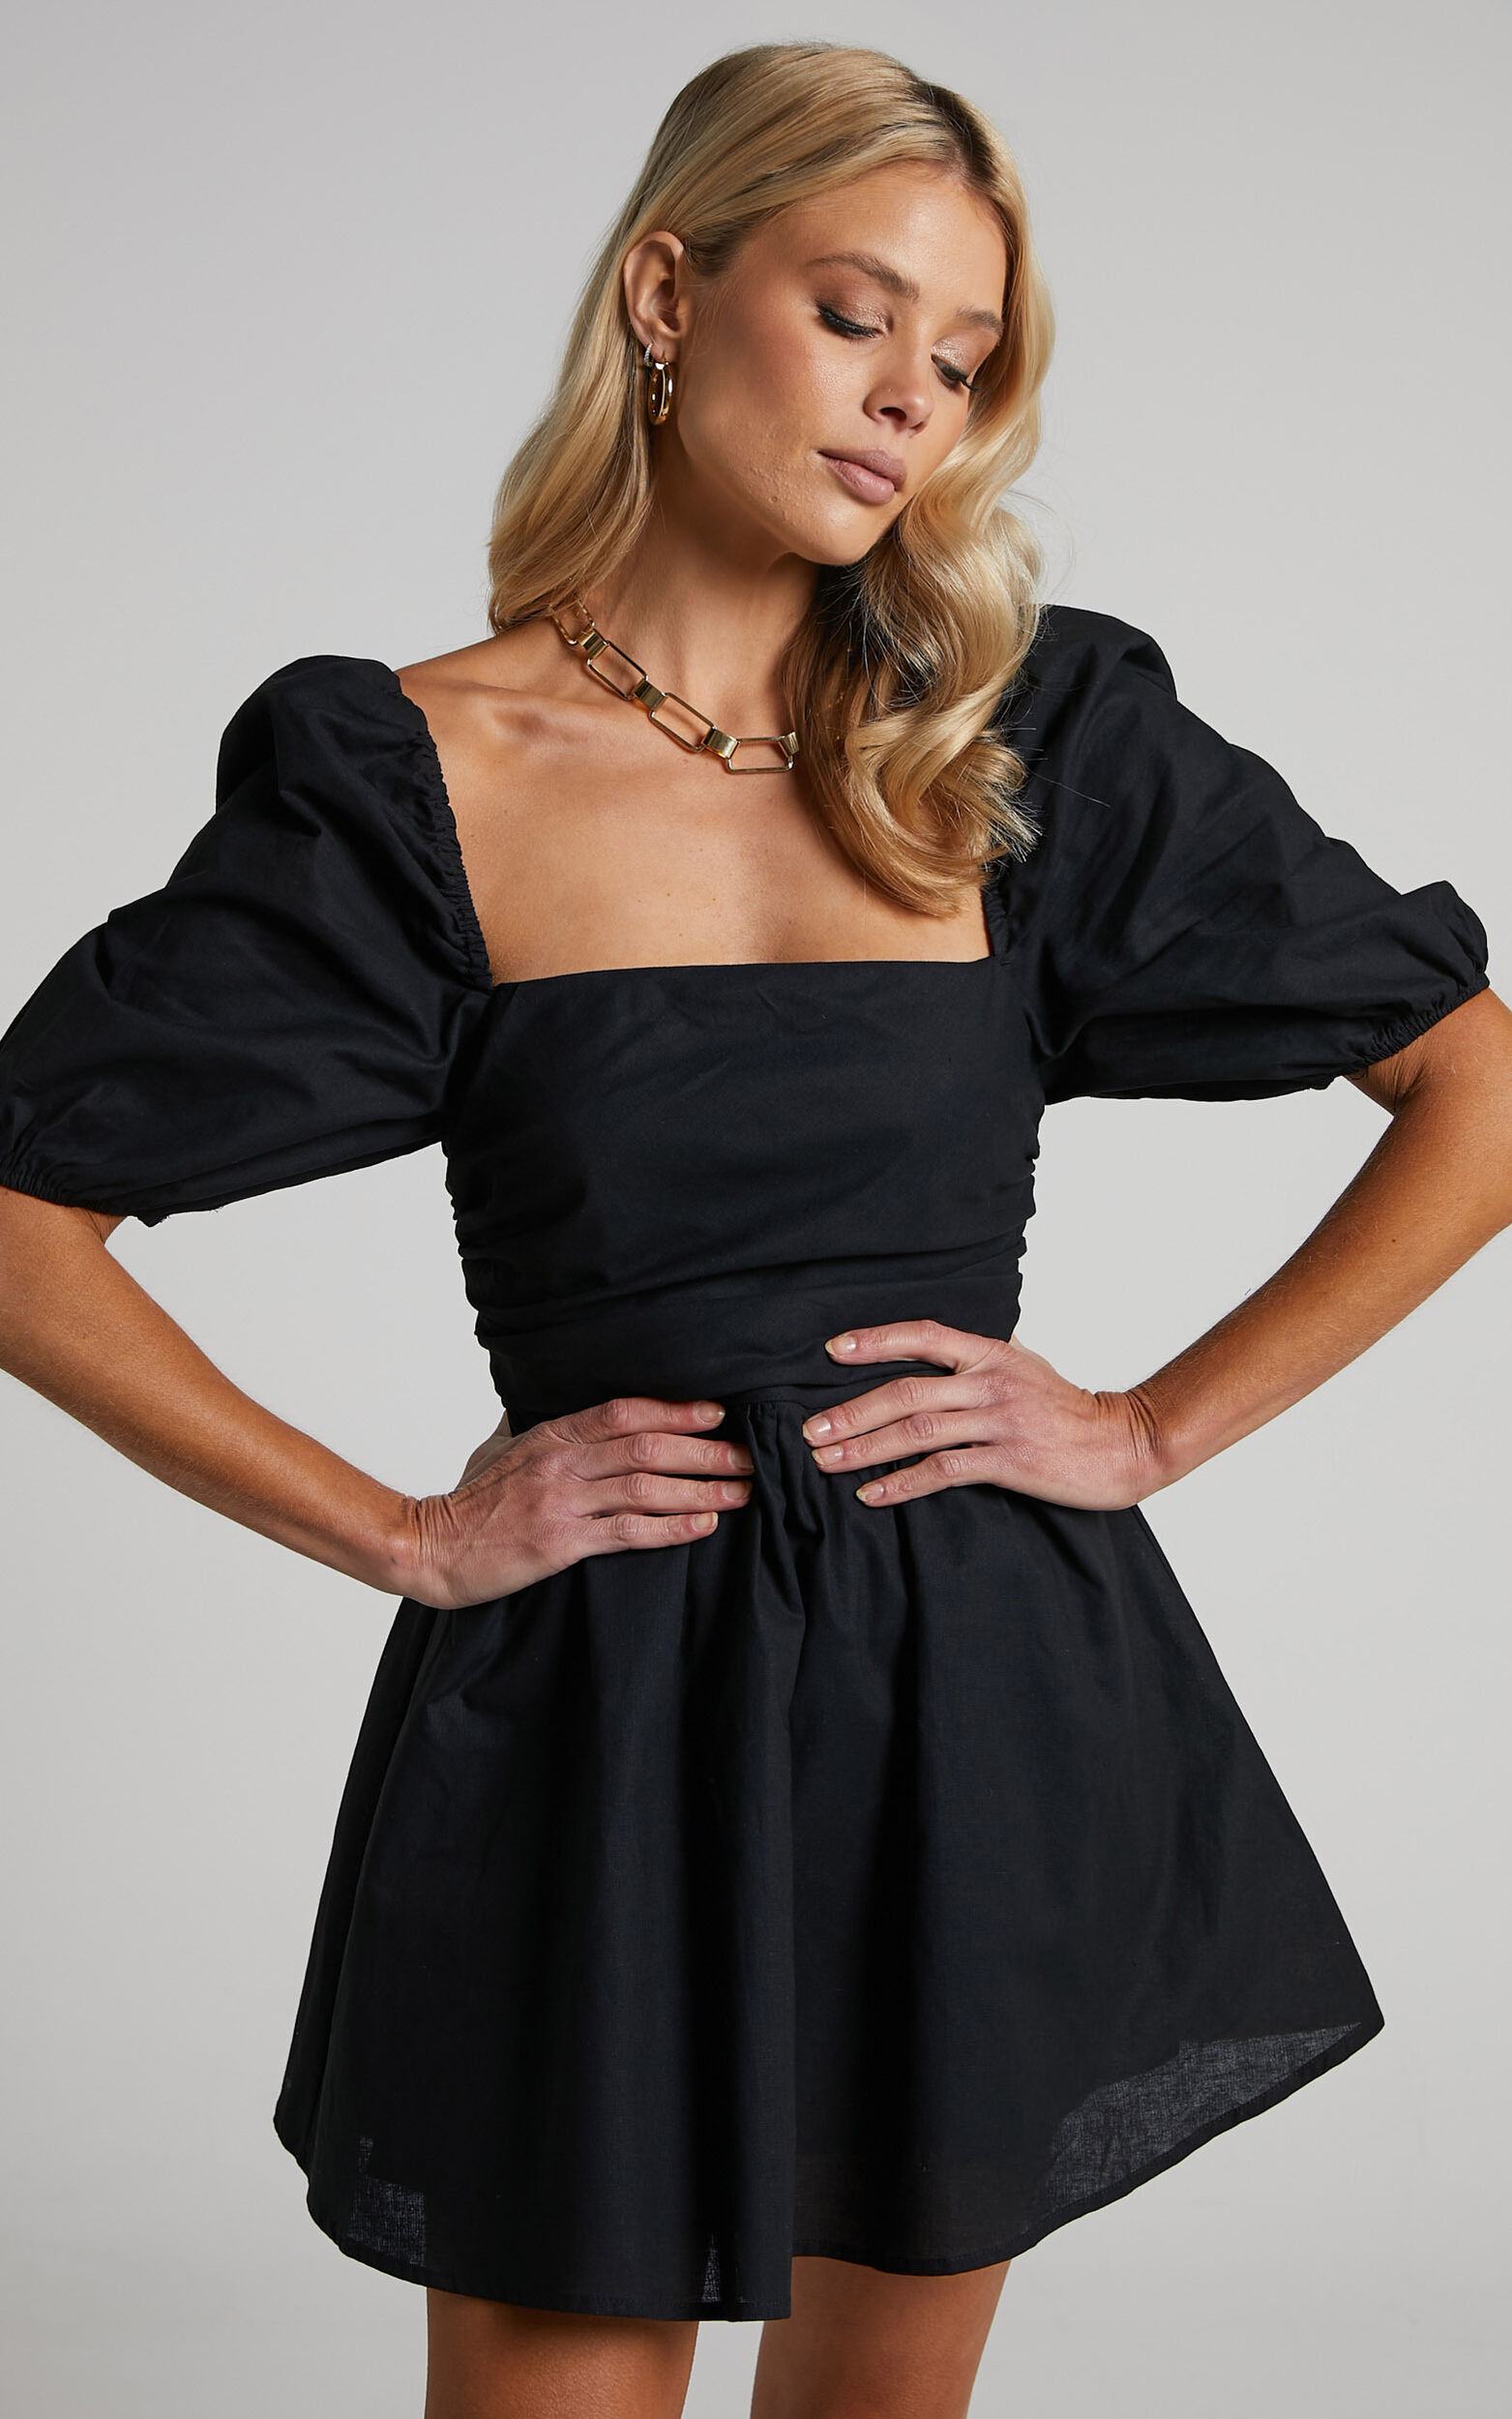 Shining Star Glitter Mini Dress - Black, Fashion Nova, Dresses